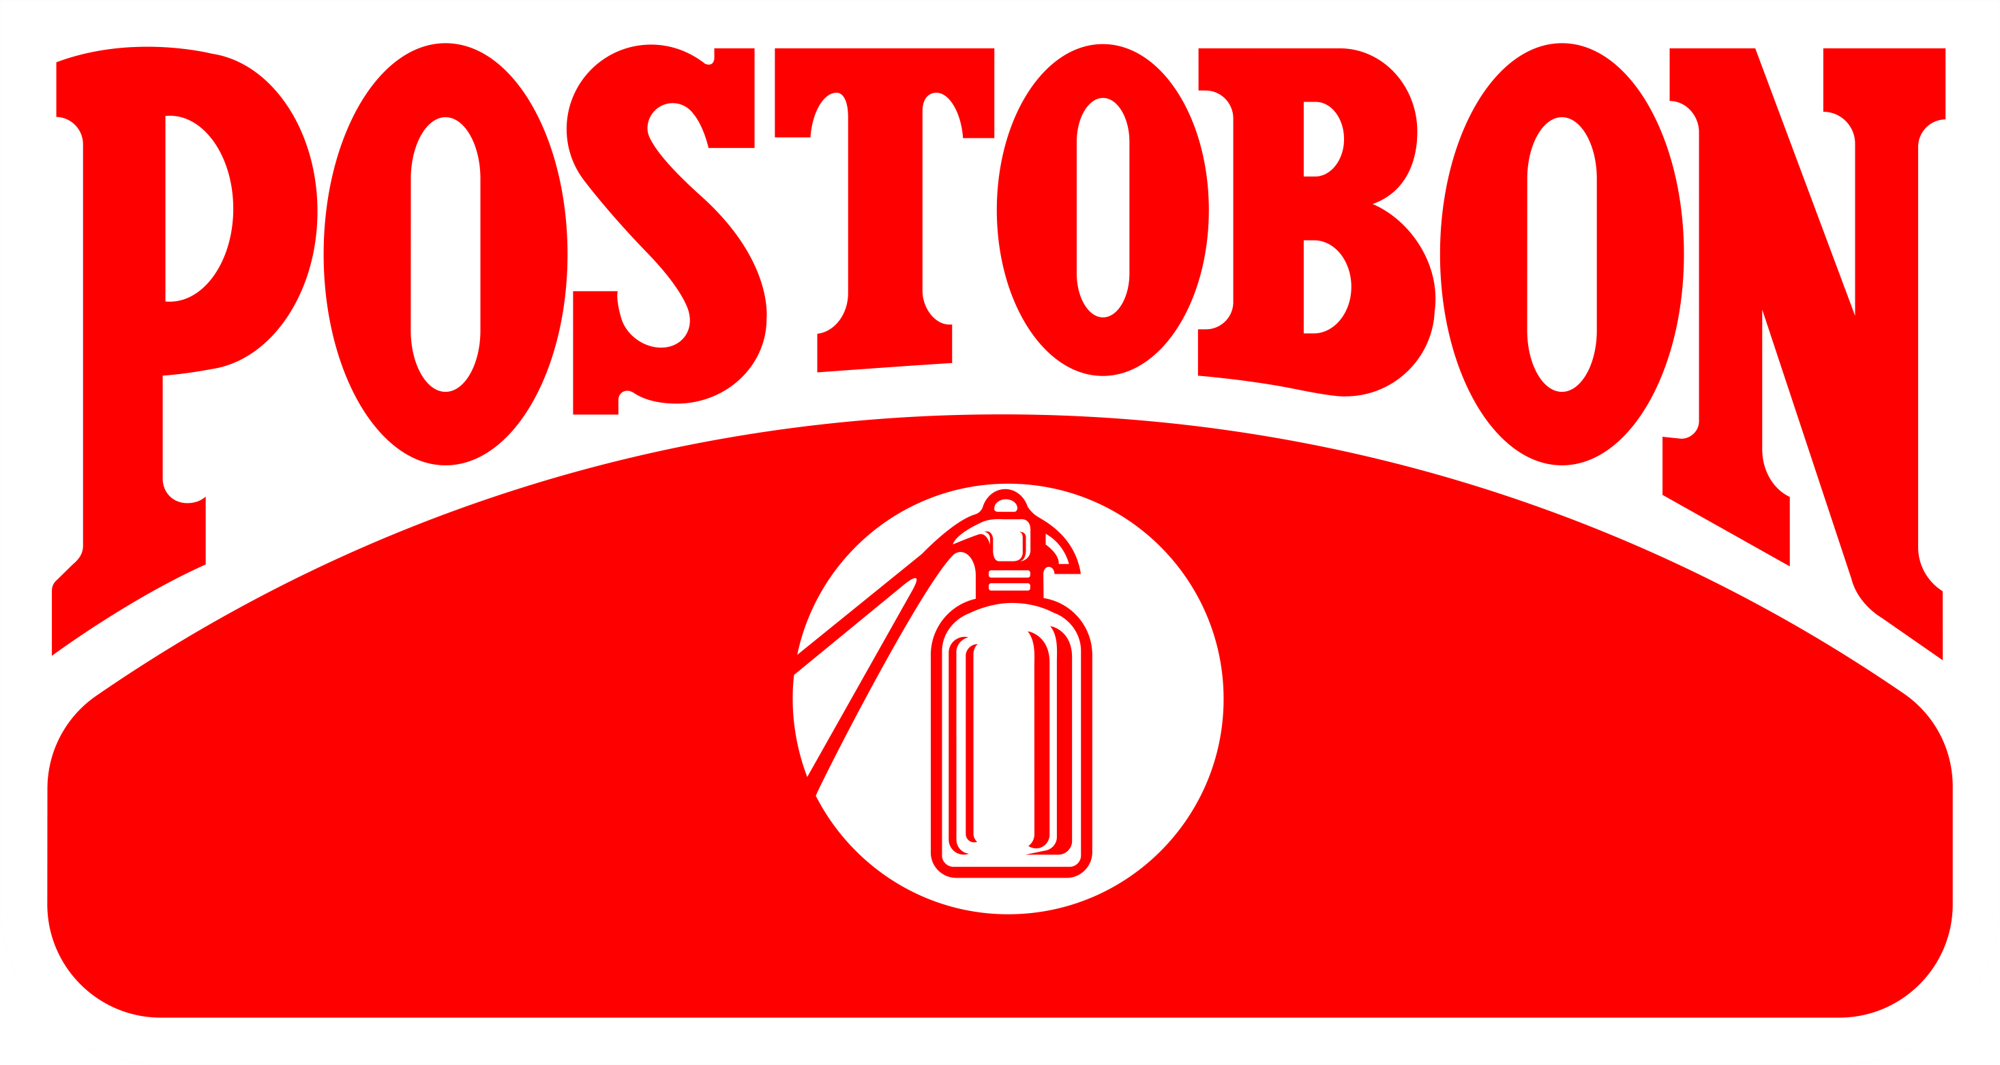 Postobon Logo - Postobón (soda)